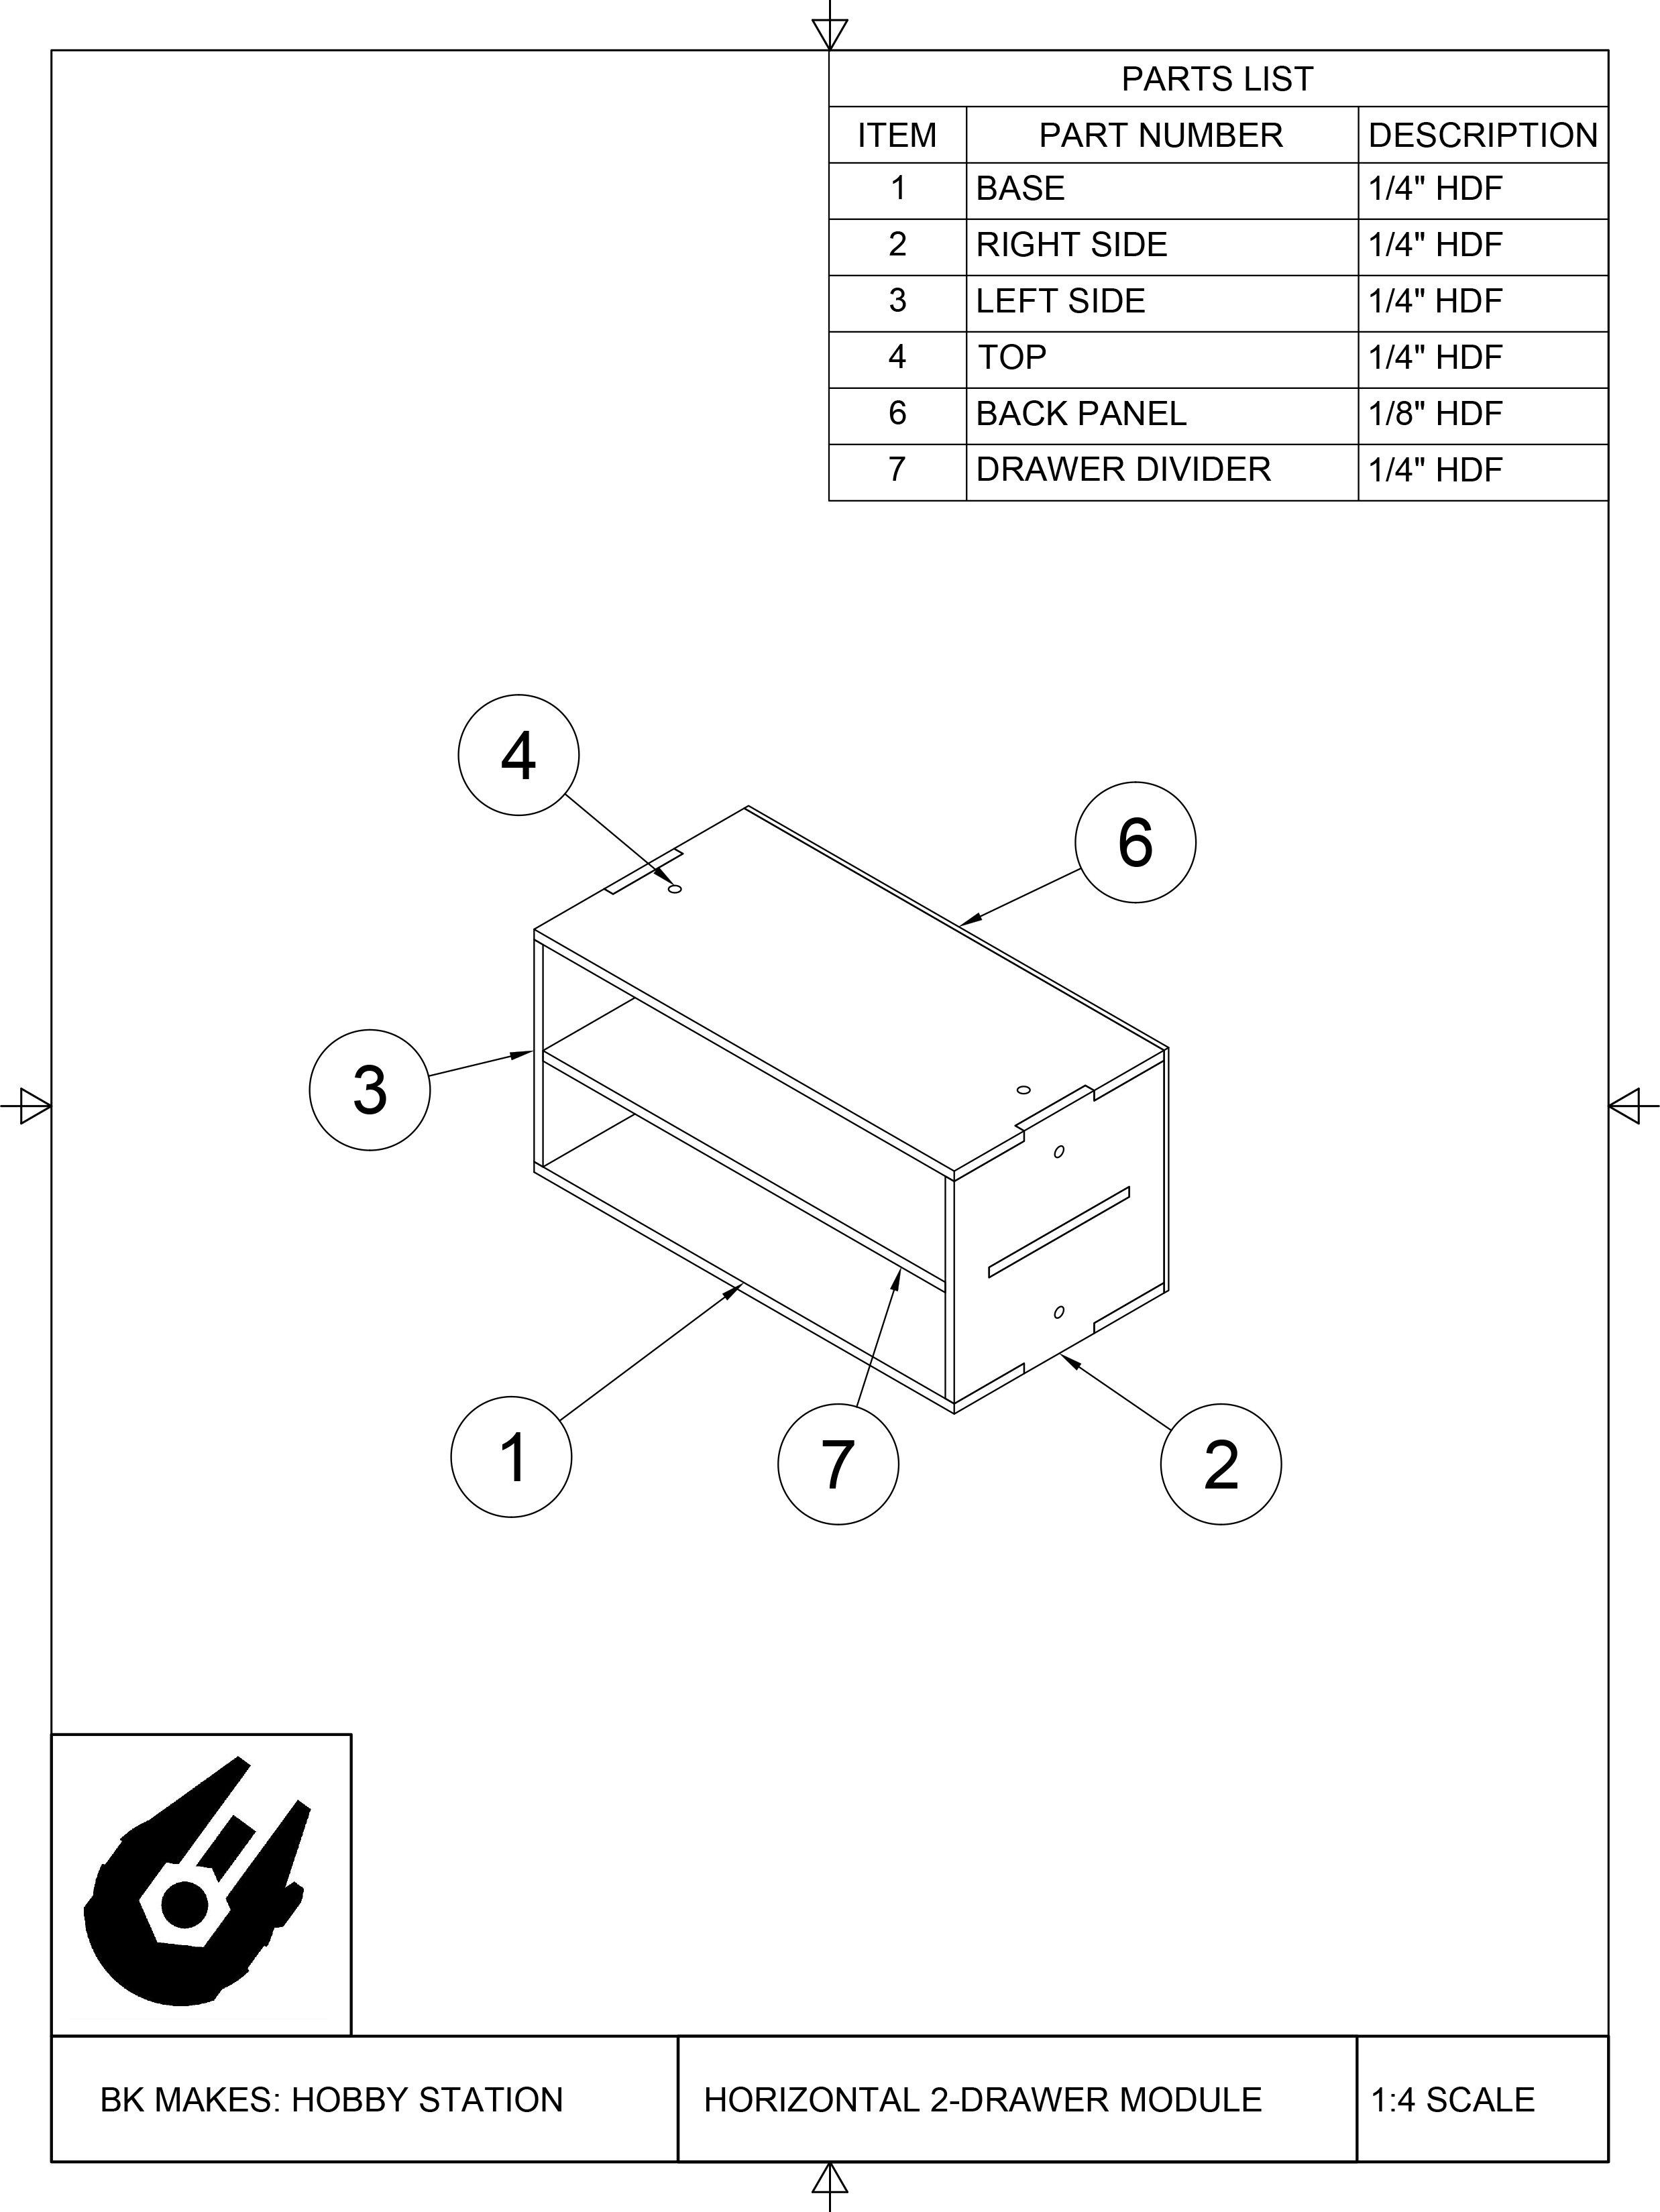 BK MAKES Horizontal 2-Drawer Module Assembly Sheet.jpg